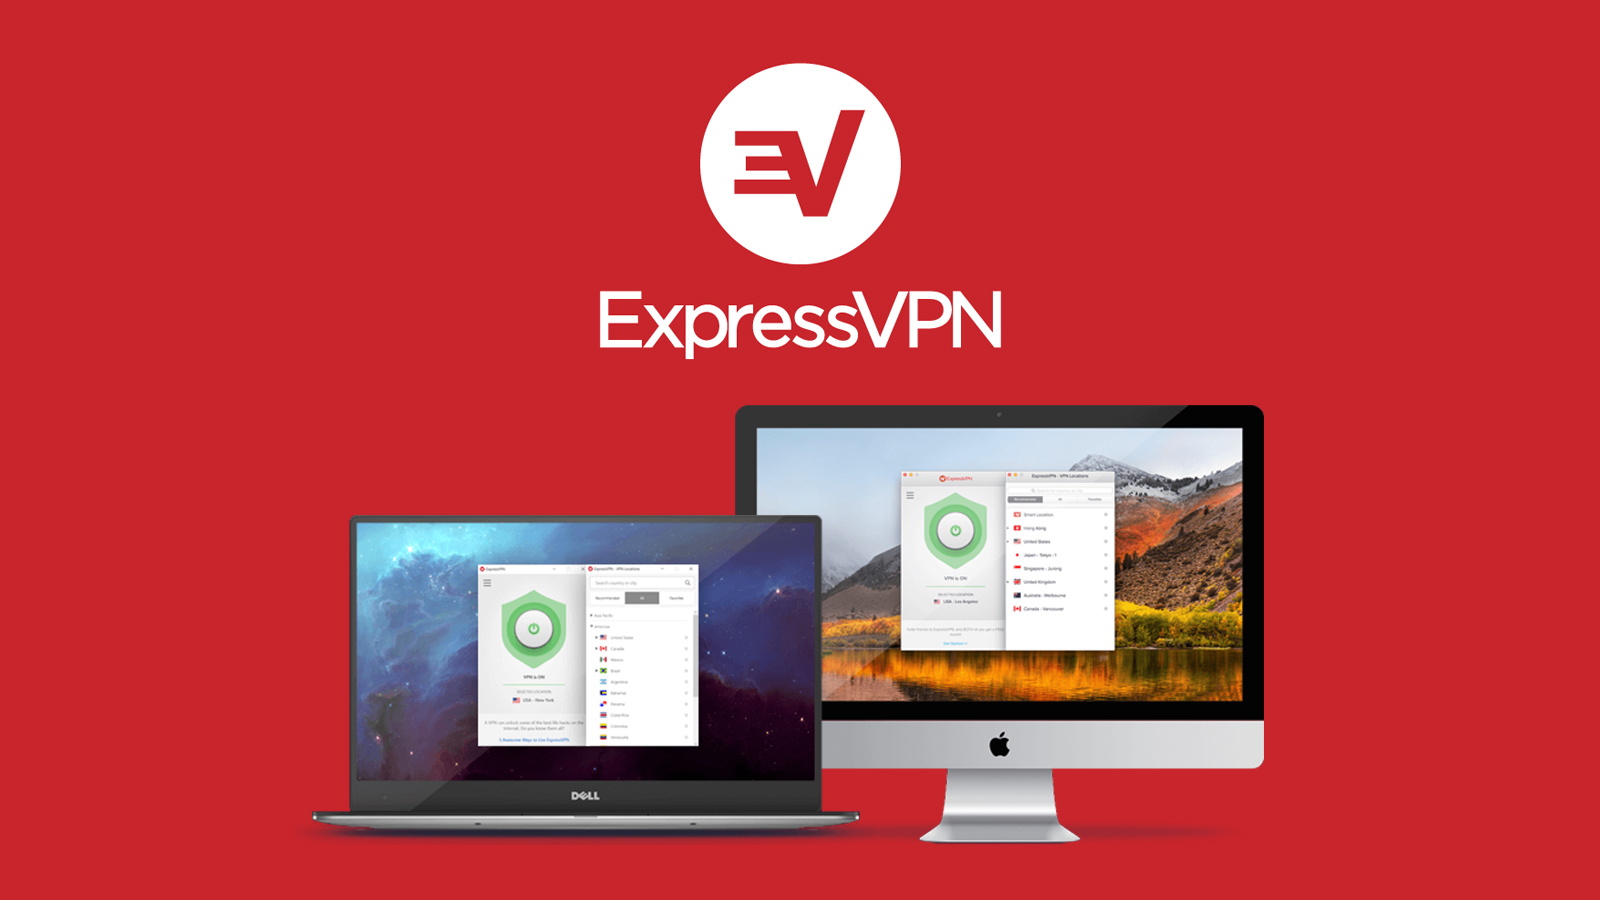 express vpn activation code free 2020